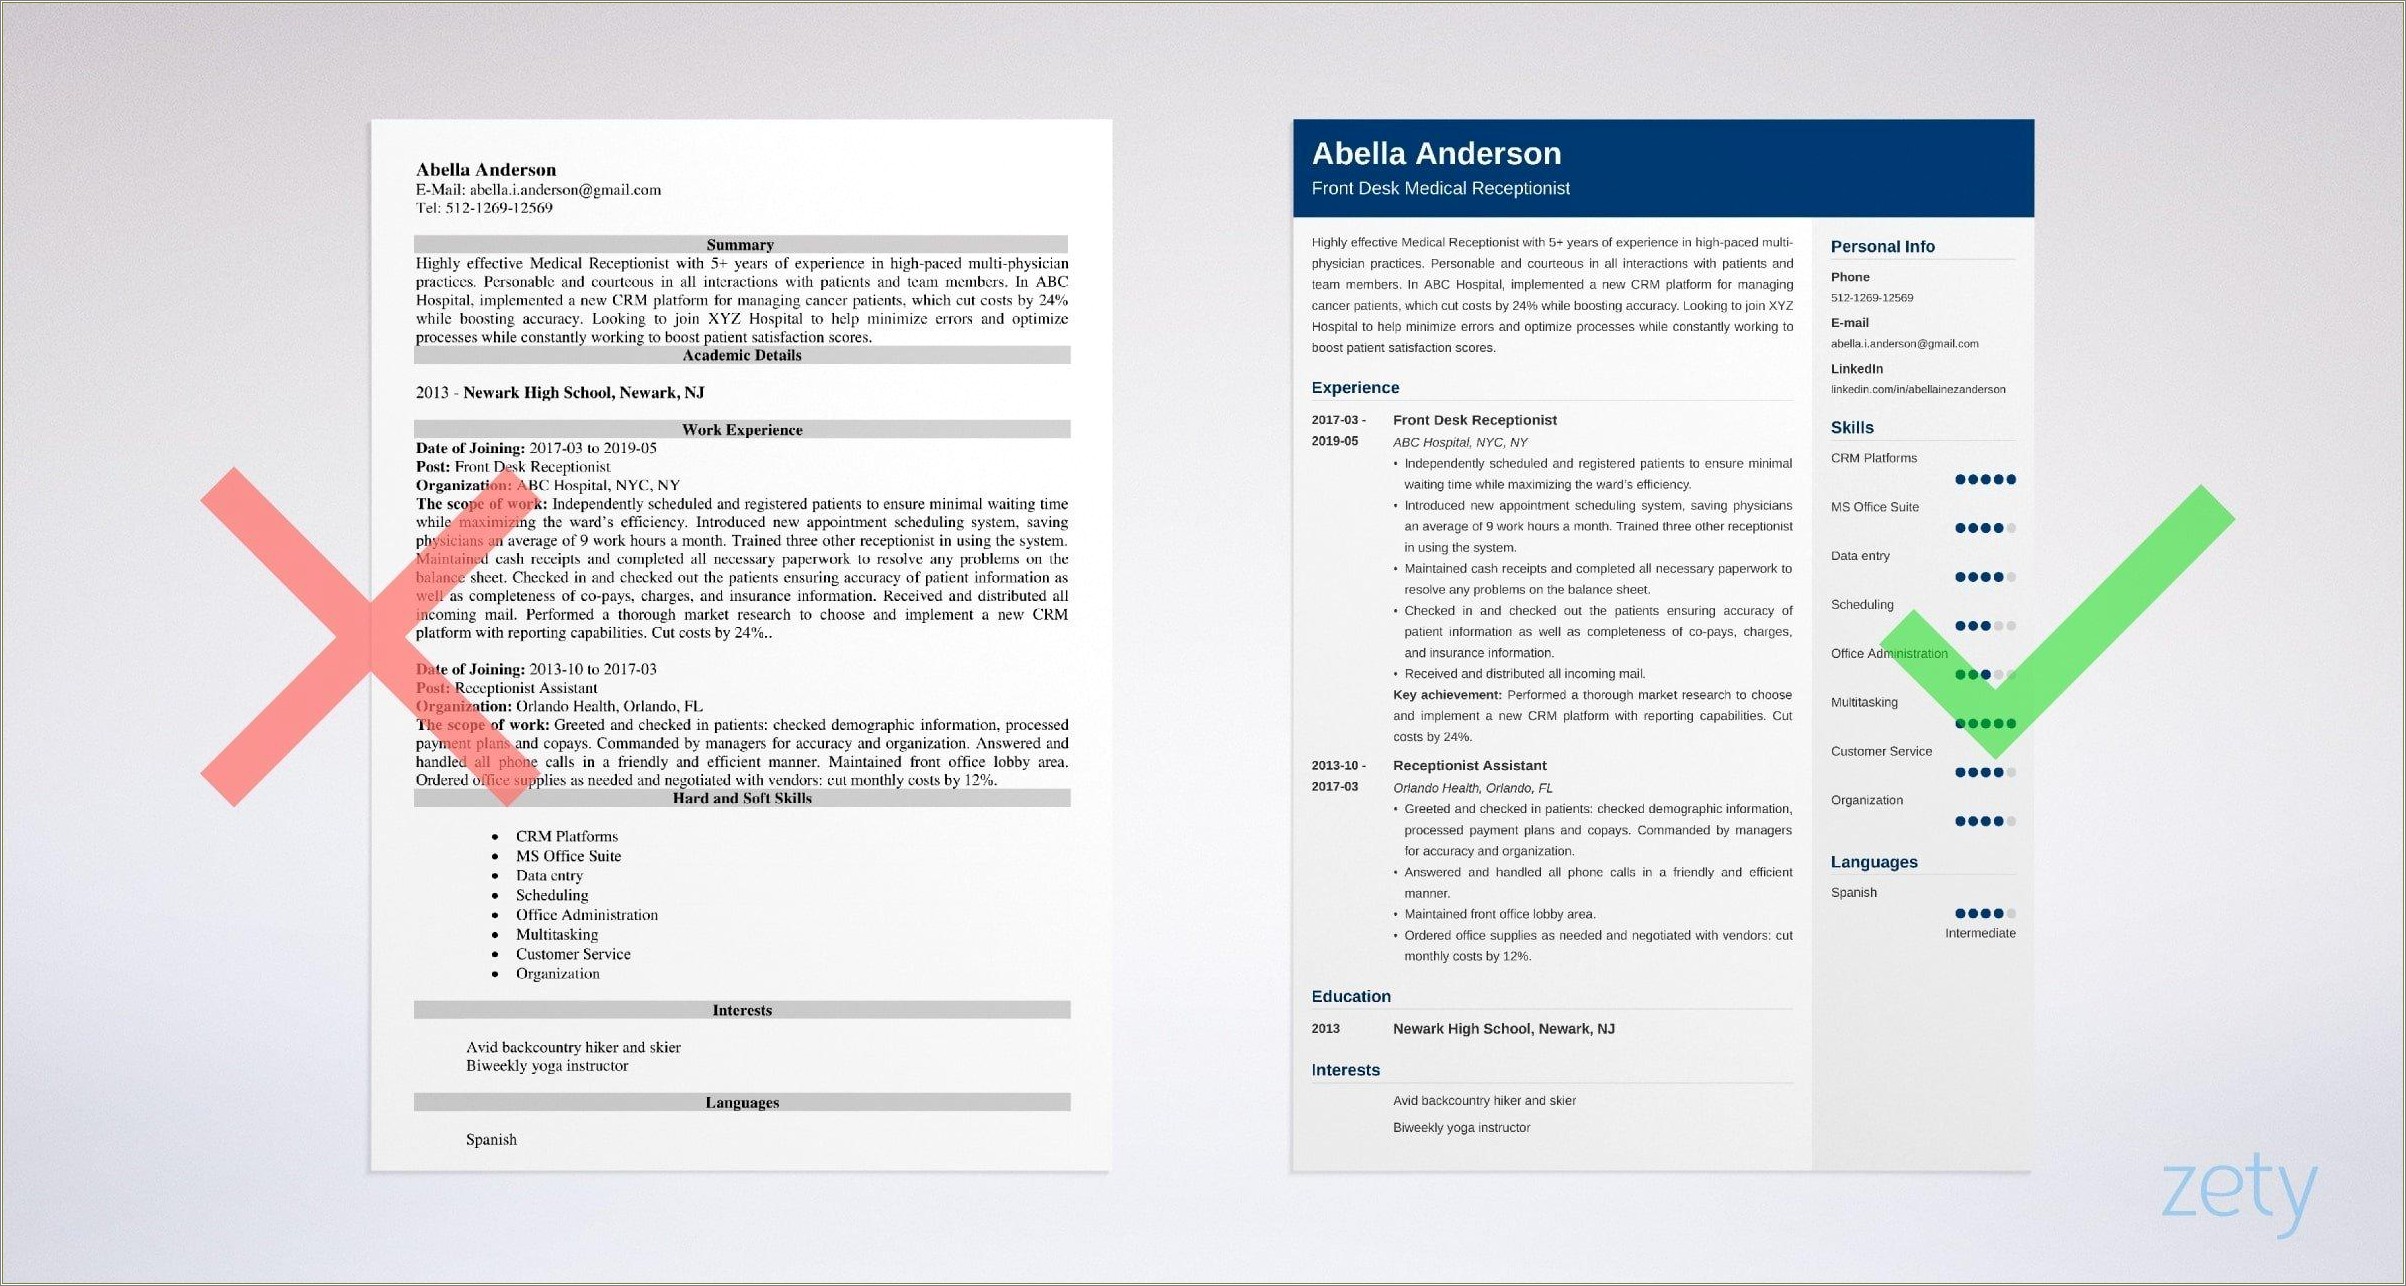 Resume Skills For Medical Administrative Assistant